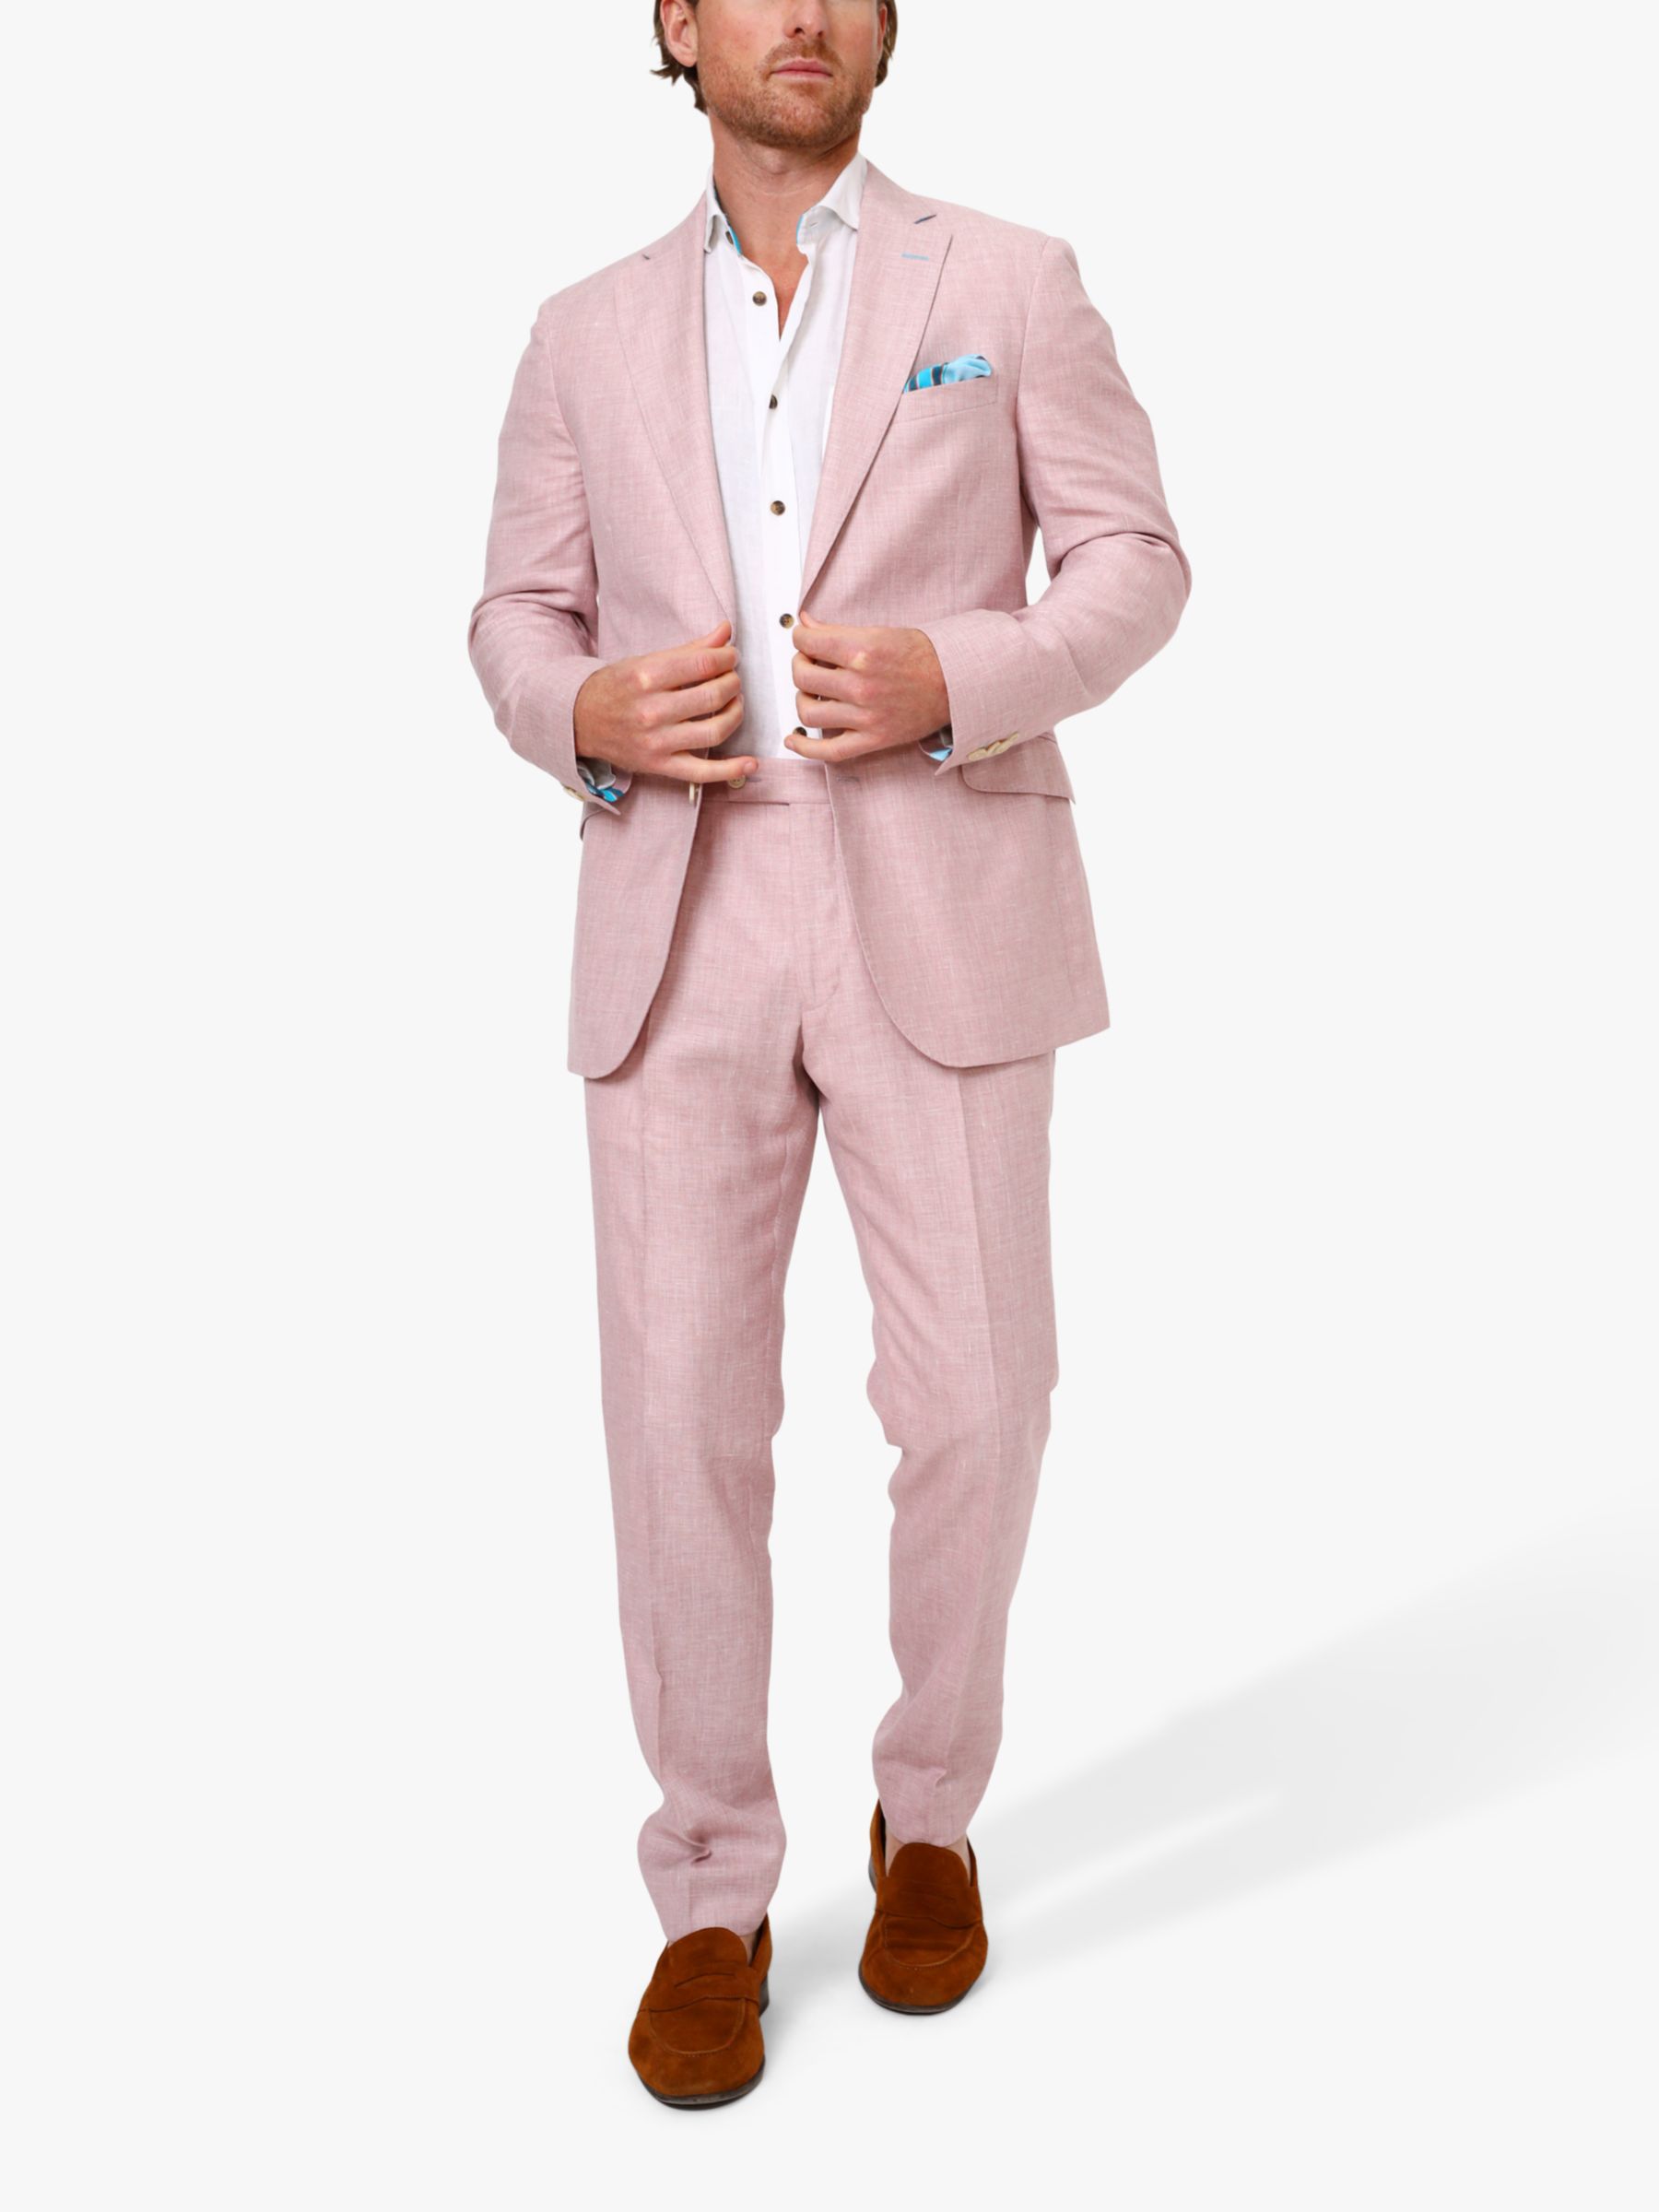 KOY Linen Blend Suit Trousers, Light Pink, 38R